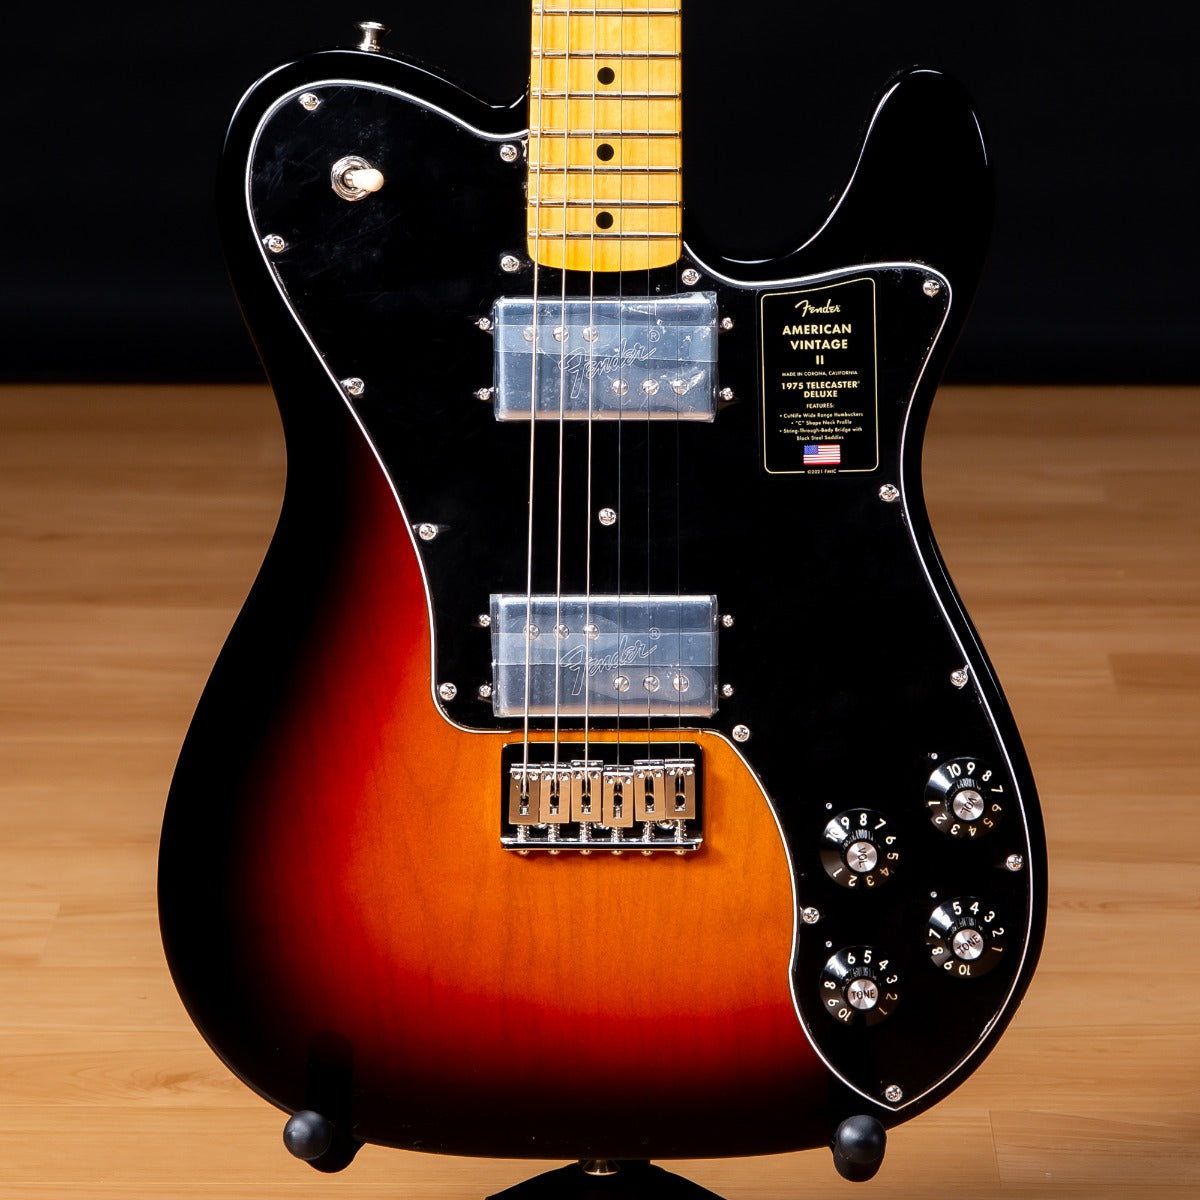 Fender American Vintage II 1975 Telecaster Deluxe - 3-Color